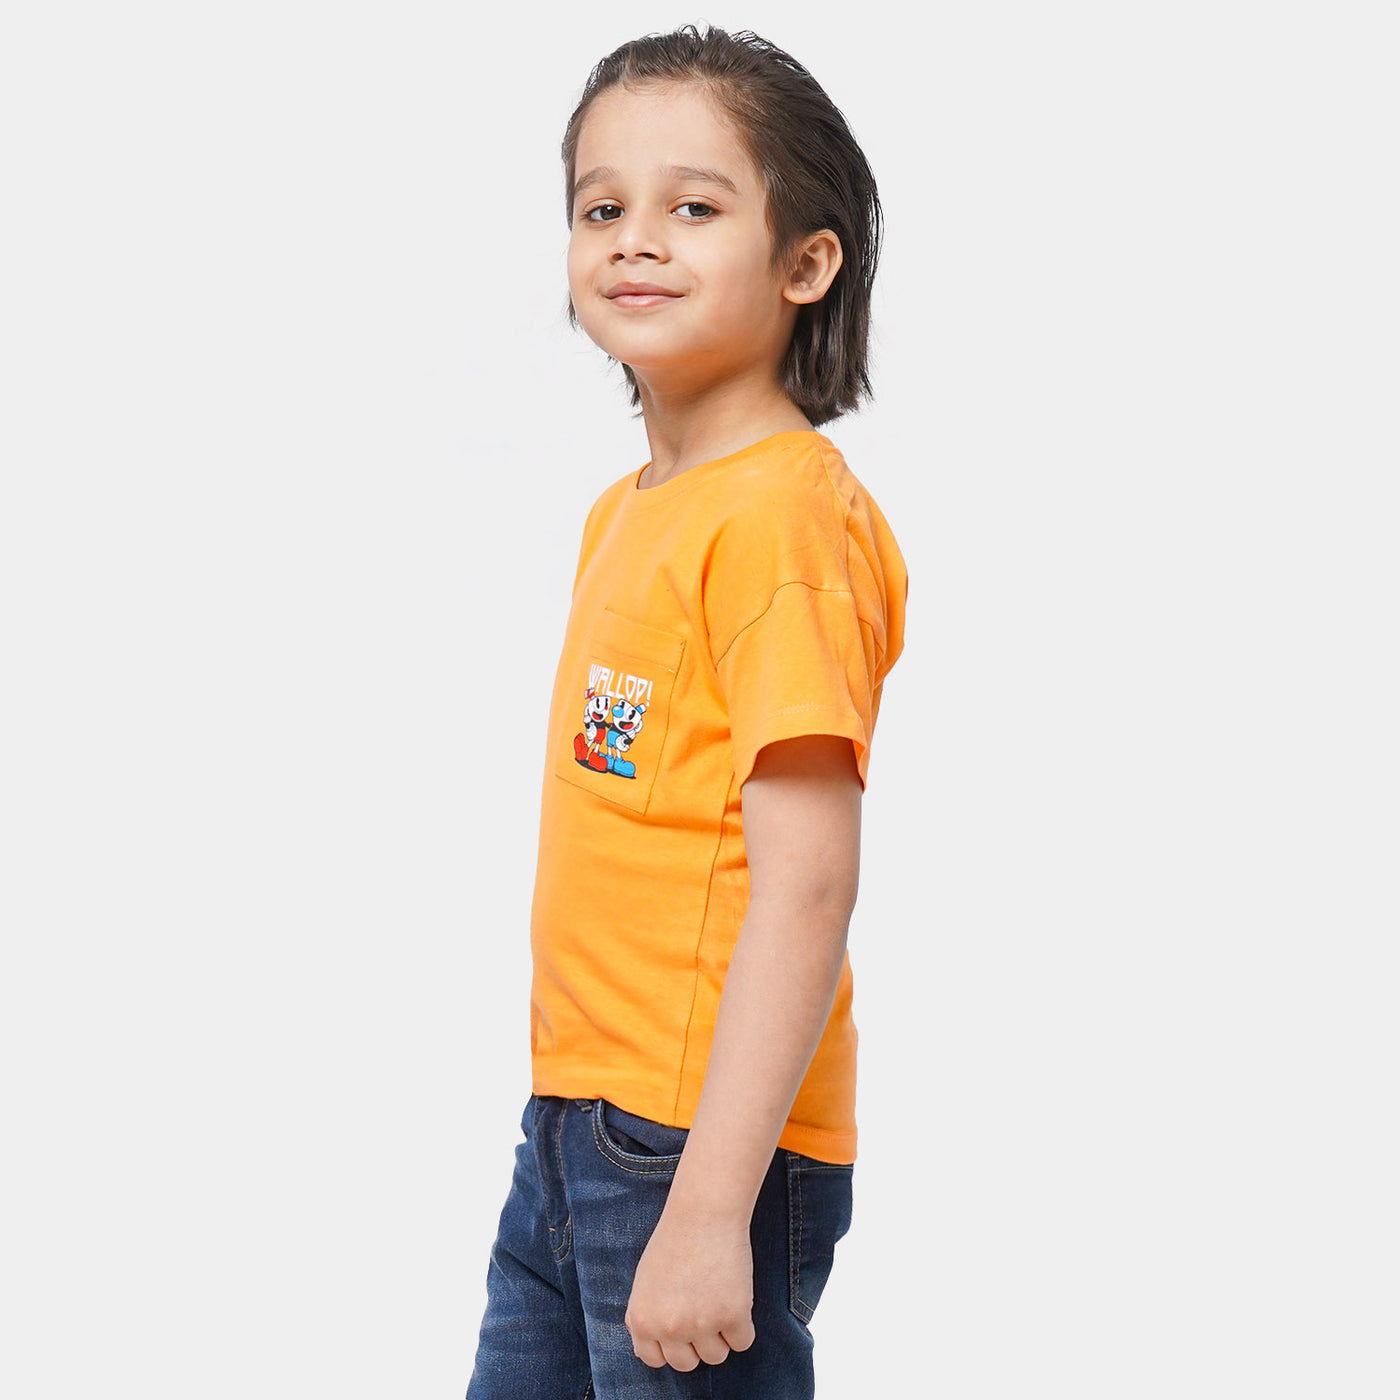 Boys Cotton T-Shirt Cuphead - Orange